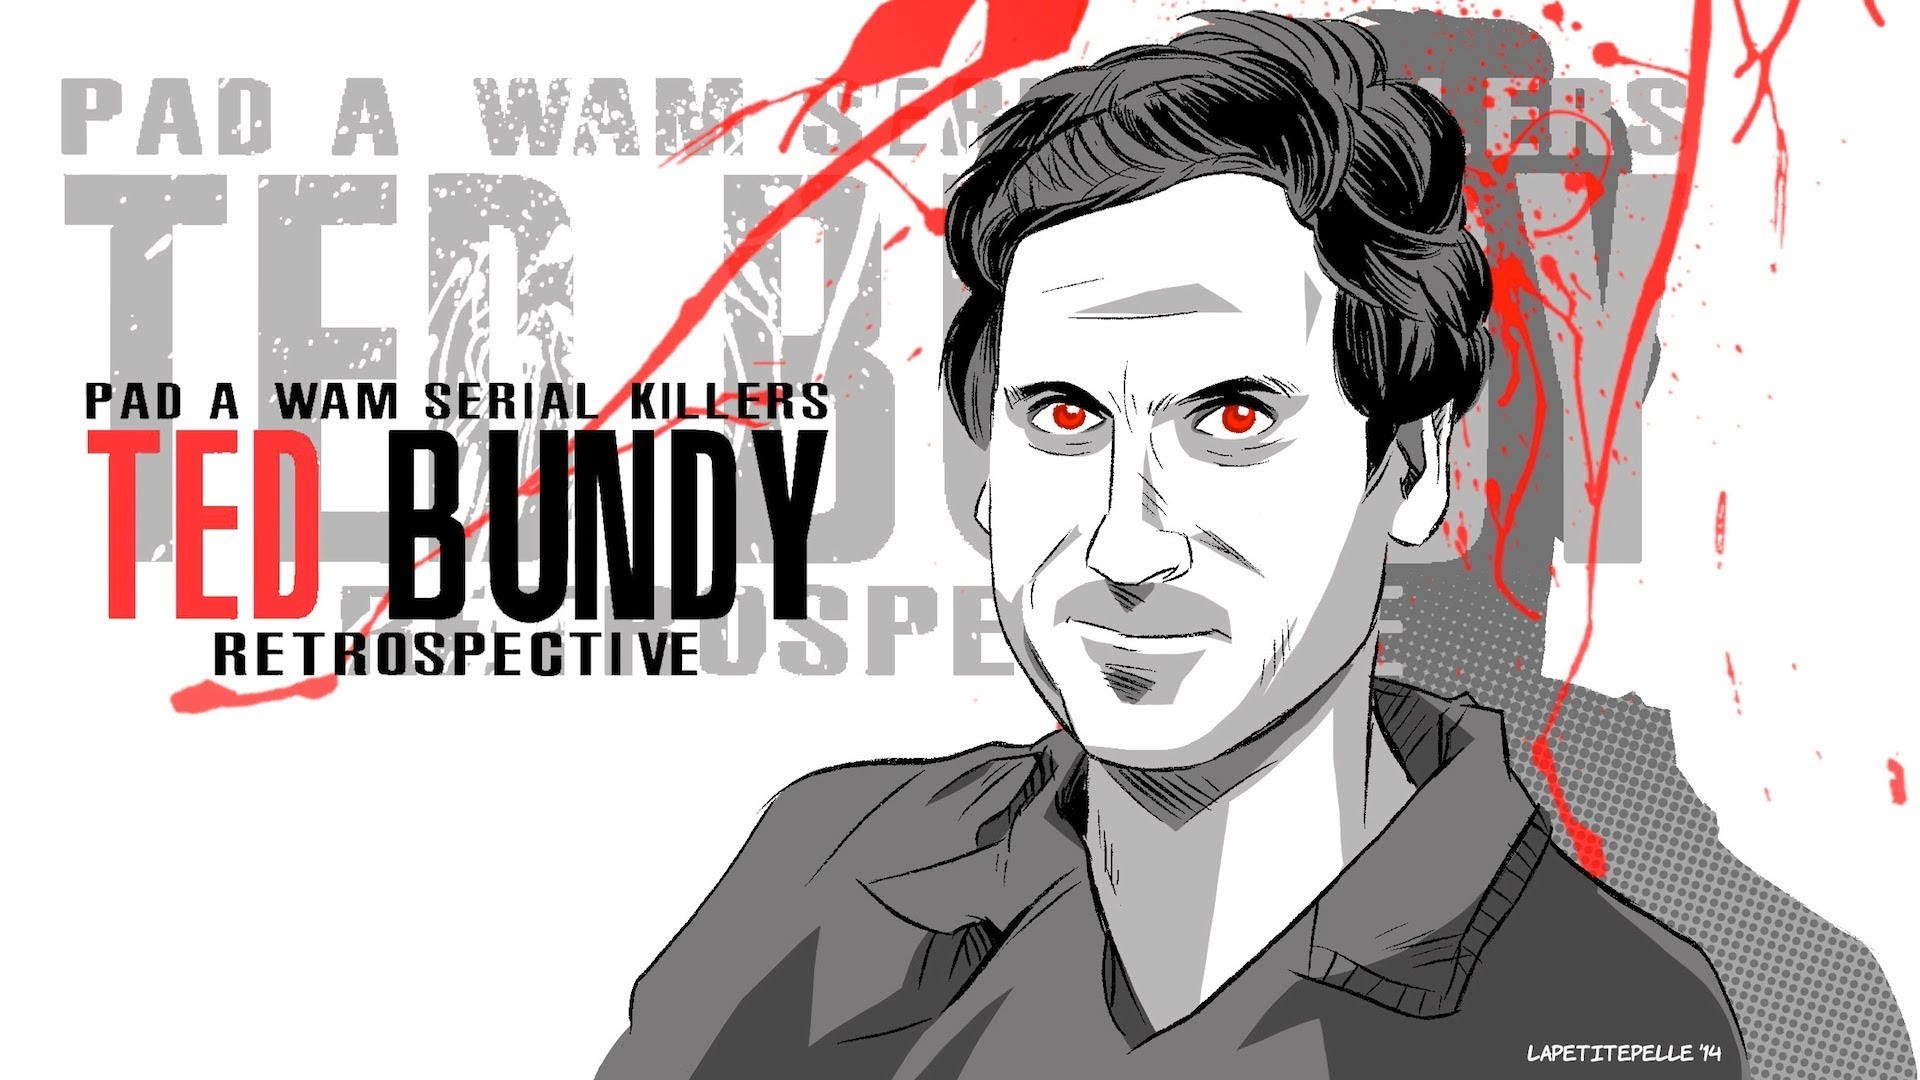 1920x1080 [PAD A WAM - SERIAL KILLERS] Retrospective - Ted Bundy (FR)